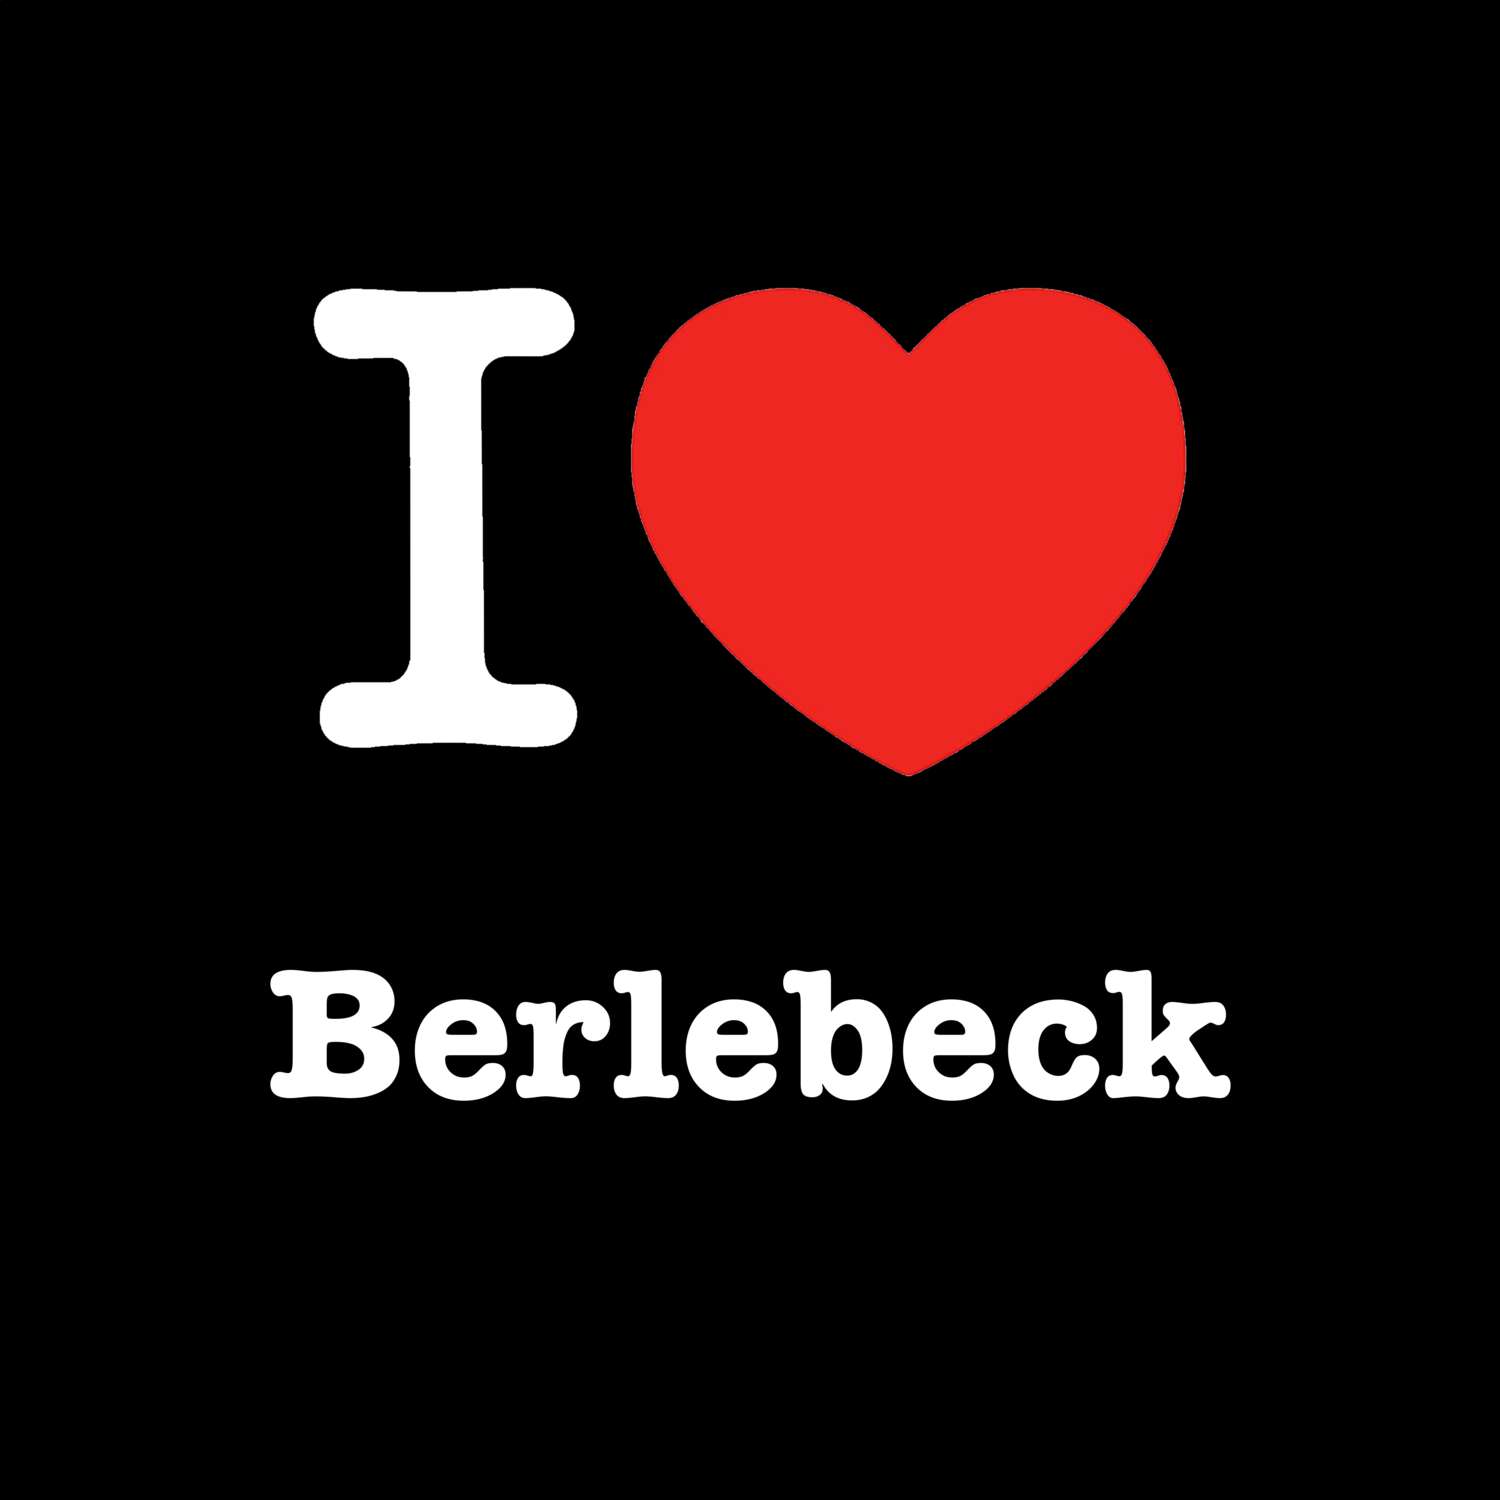 Berlebeck T-Shirt »I love«